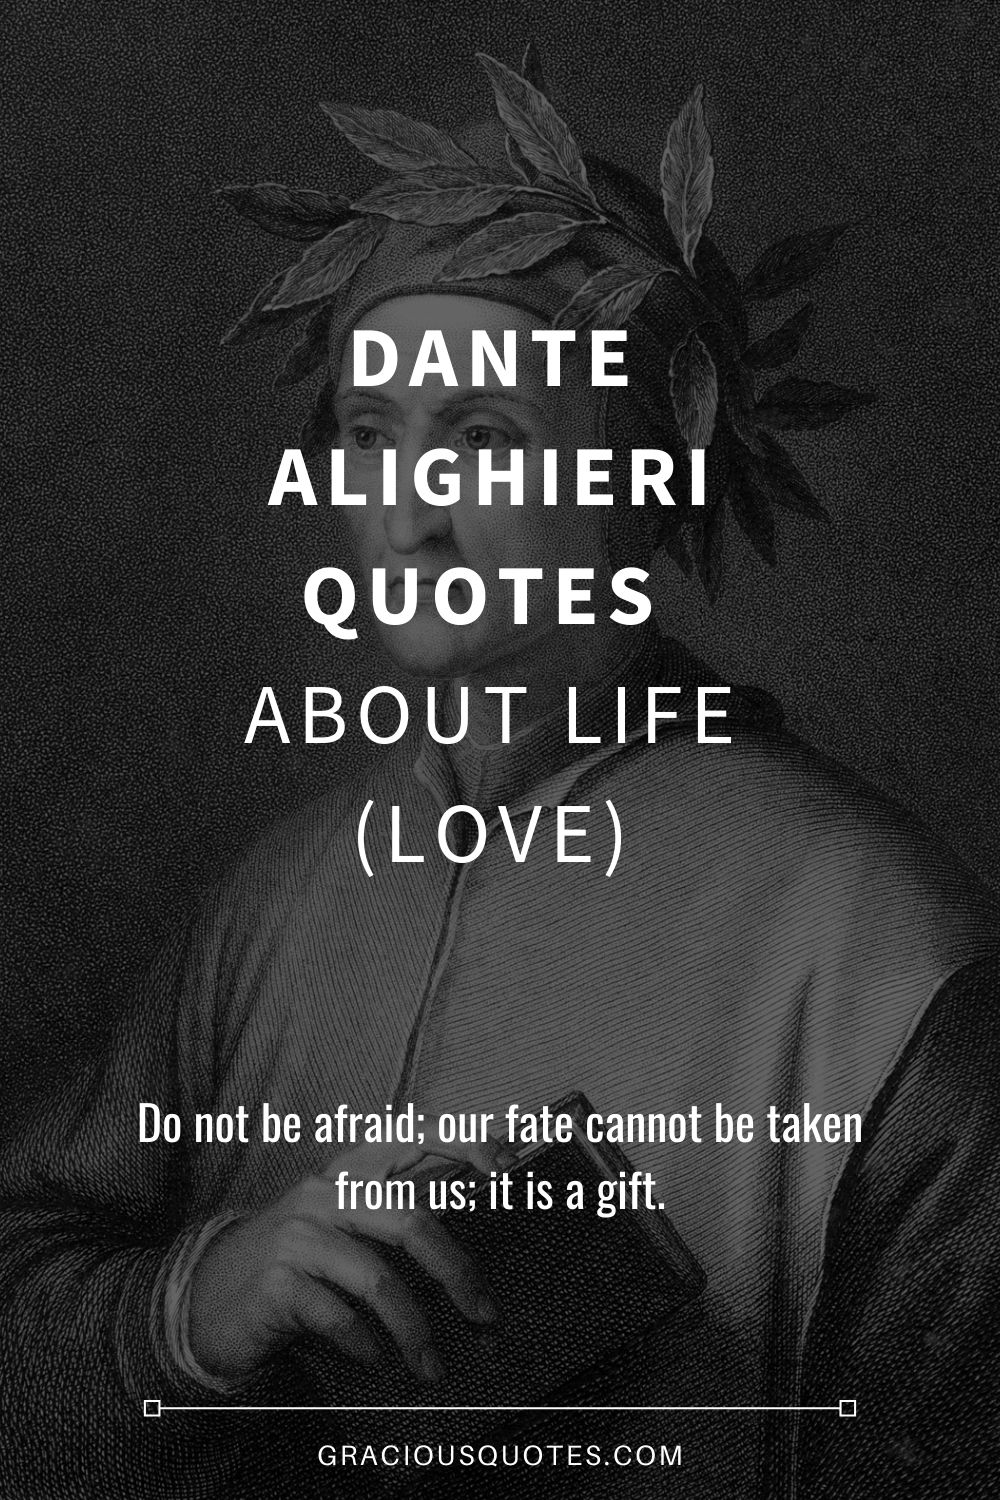 Dante Alighieri Quotes About Life (LOVE) - Gracious Quotes